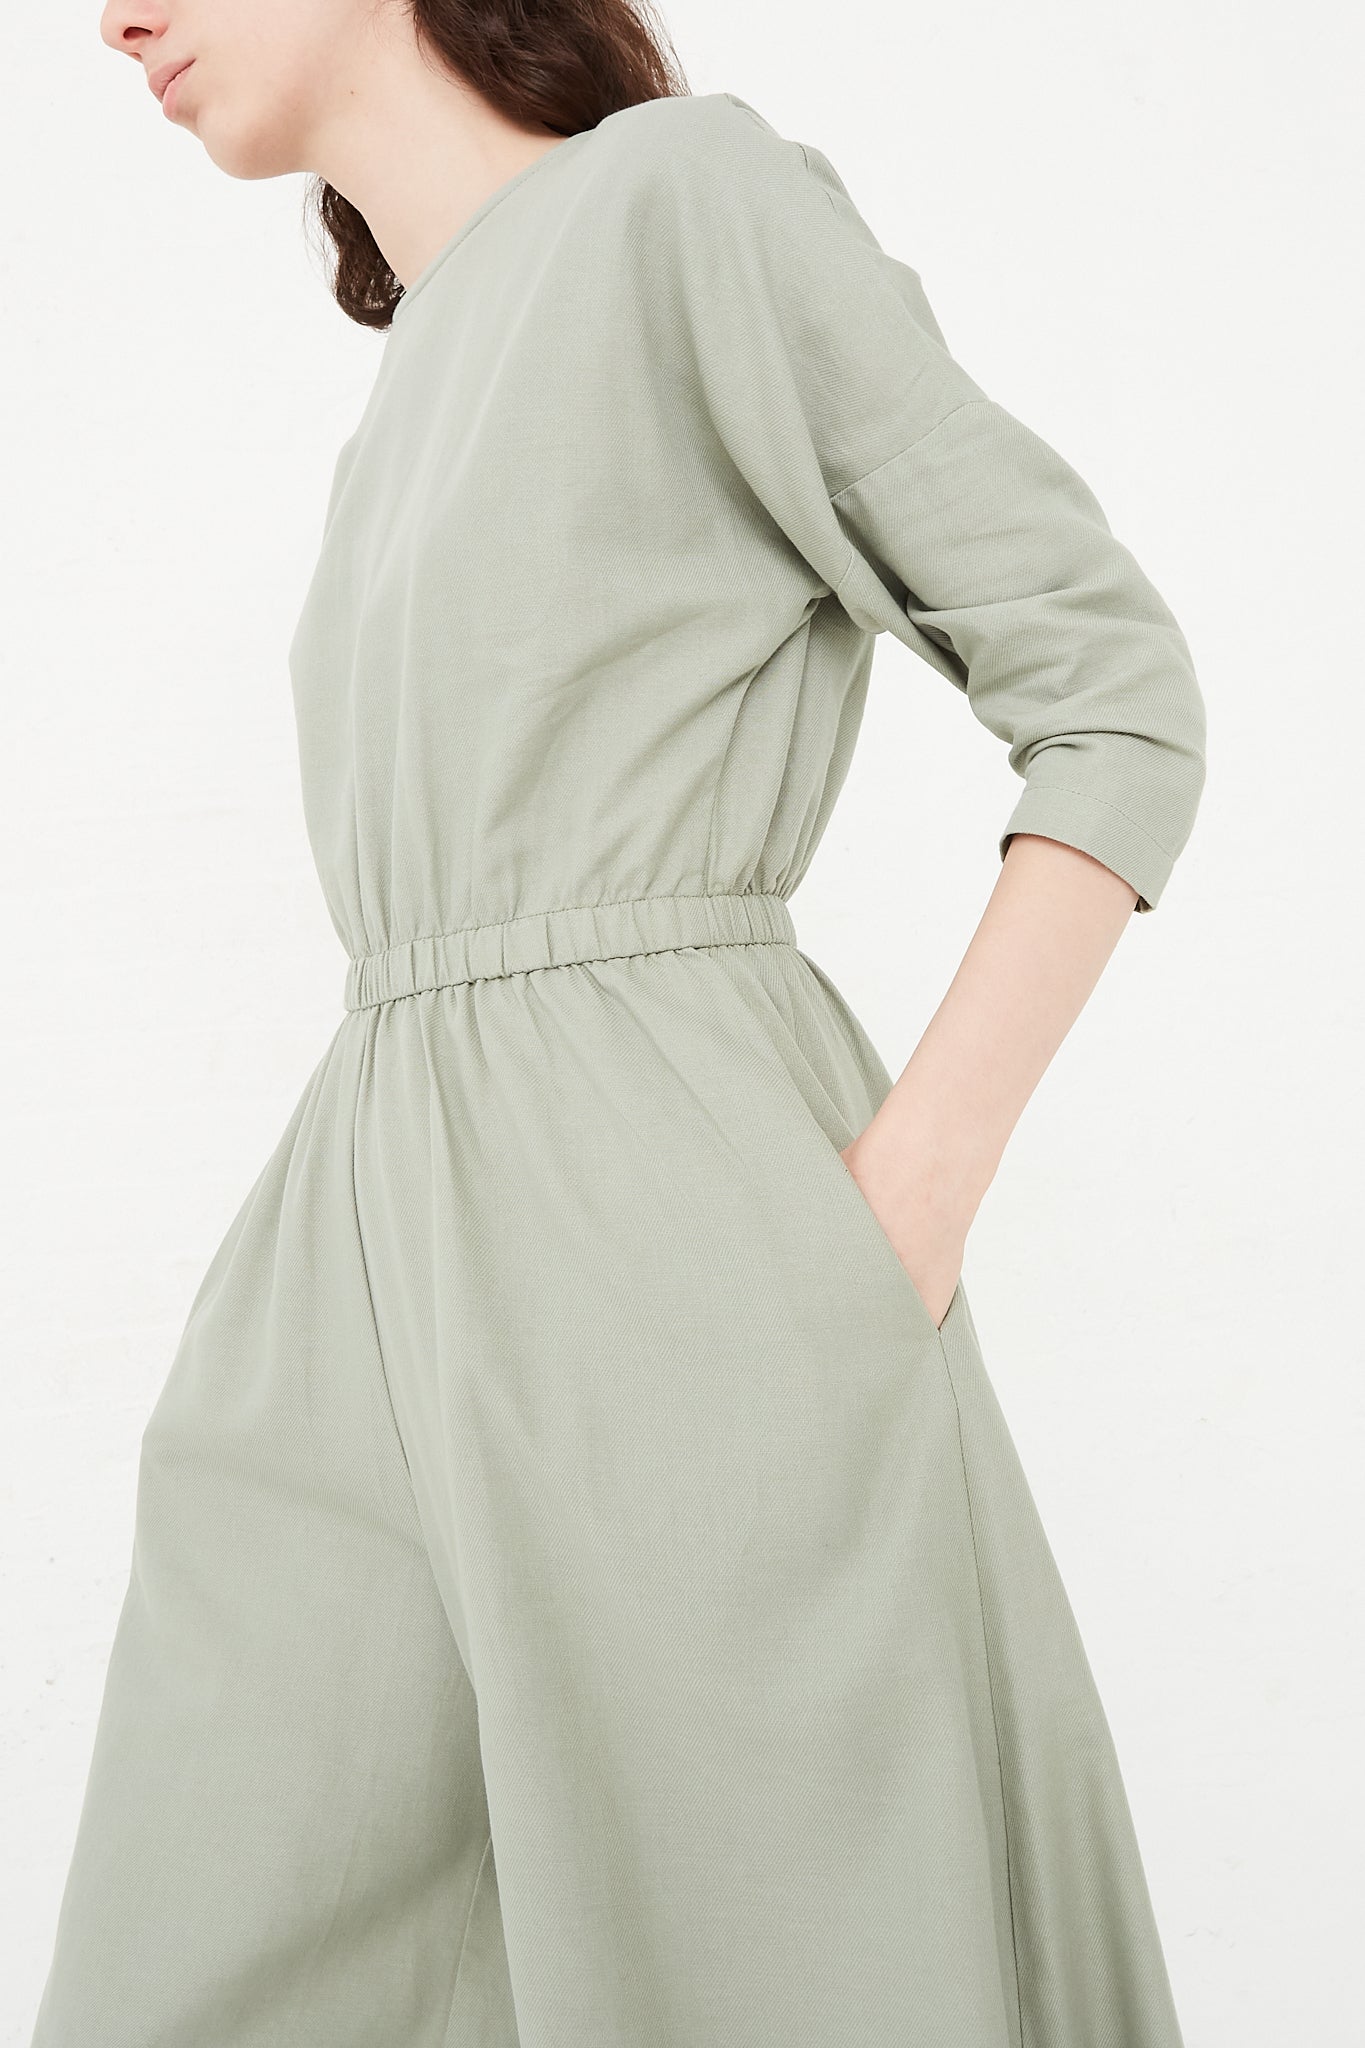 Zara | Pants & Jumpsuits | Zara Basic Culottes Overalls | Poshmark